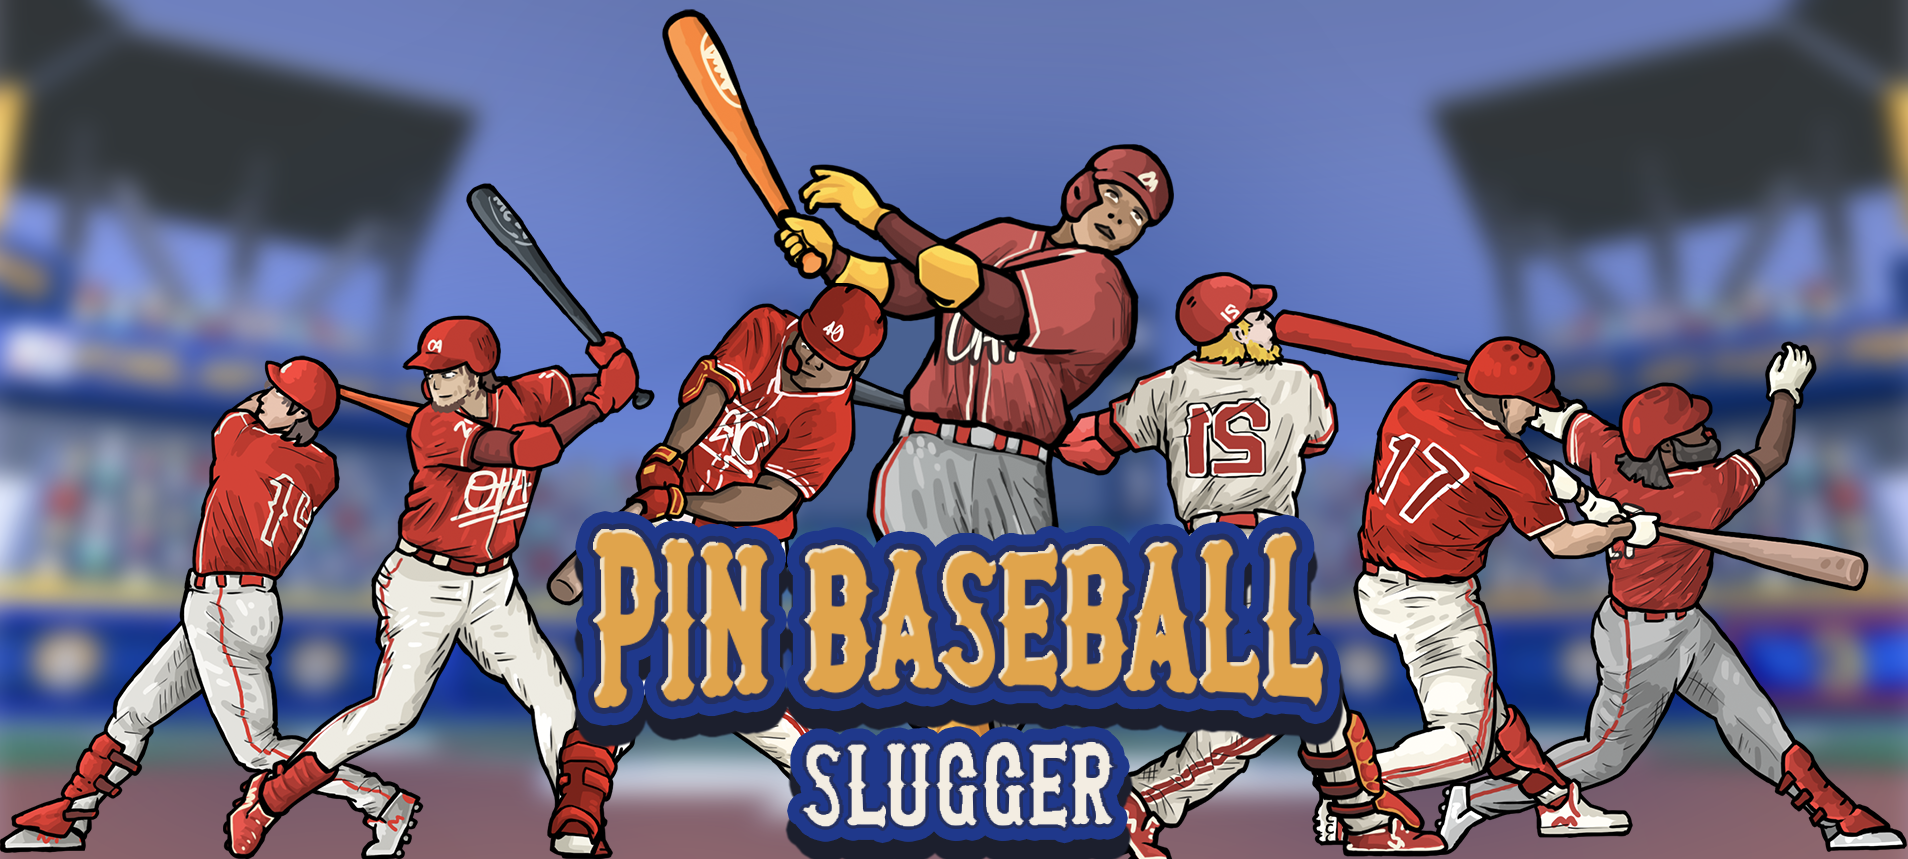 Screenshot 1 of Pin permainan besbol - slugger 2.0.0